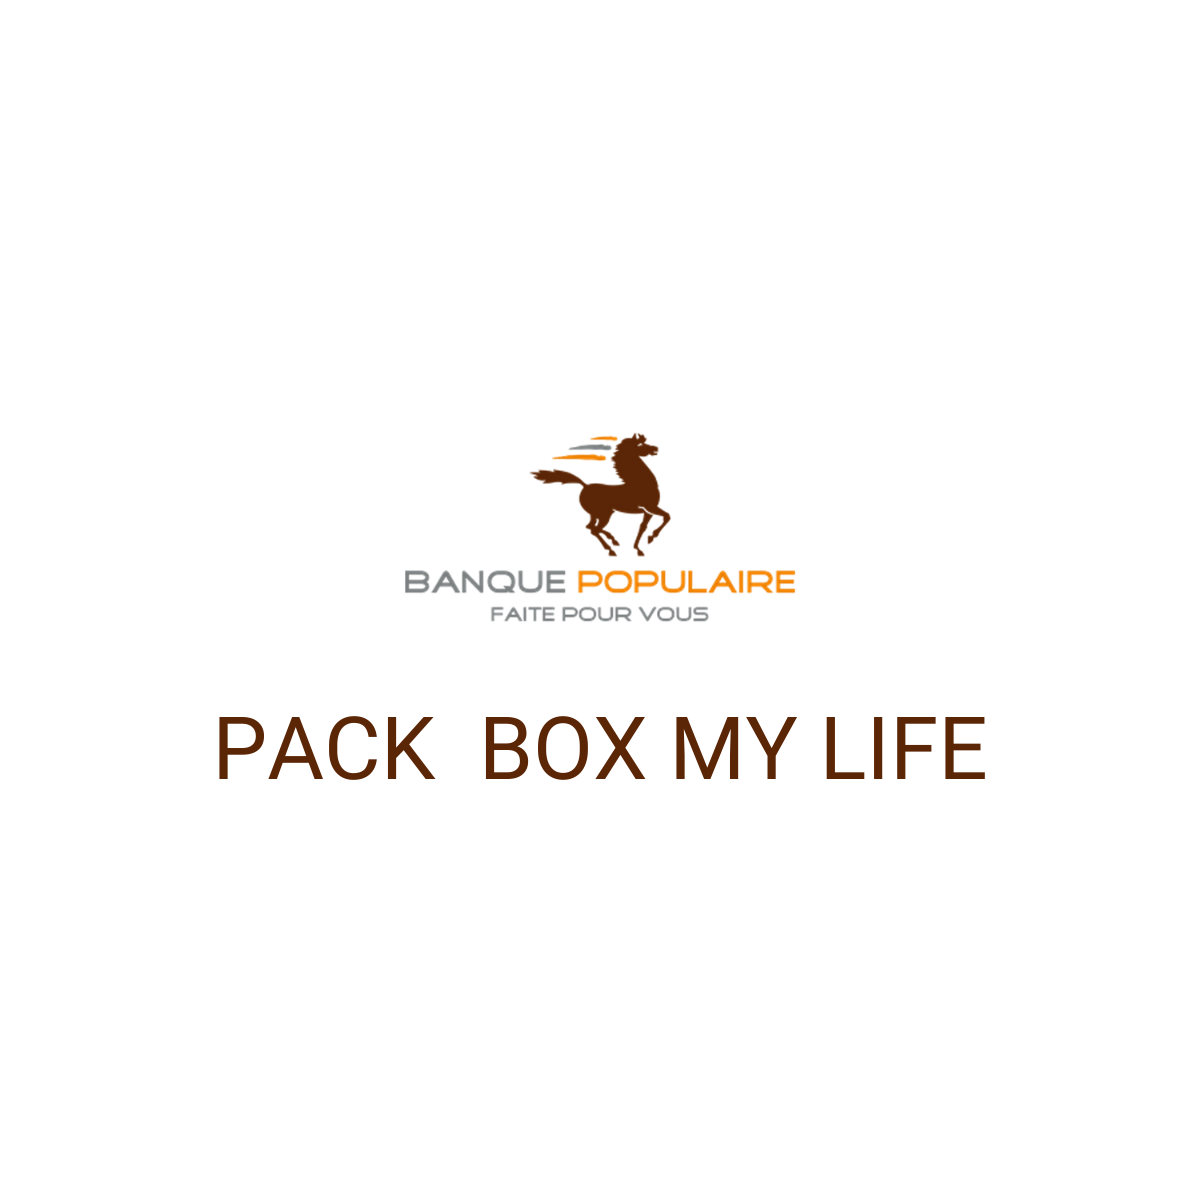 PACK BOX MY LIFE